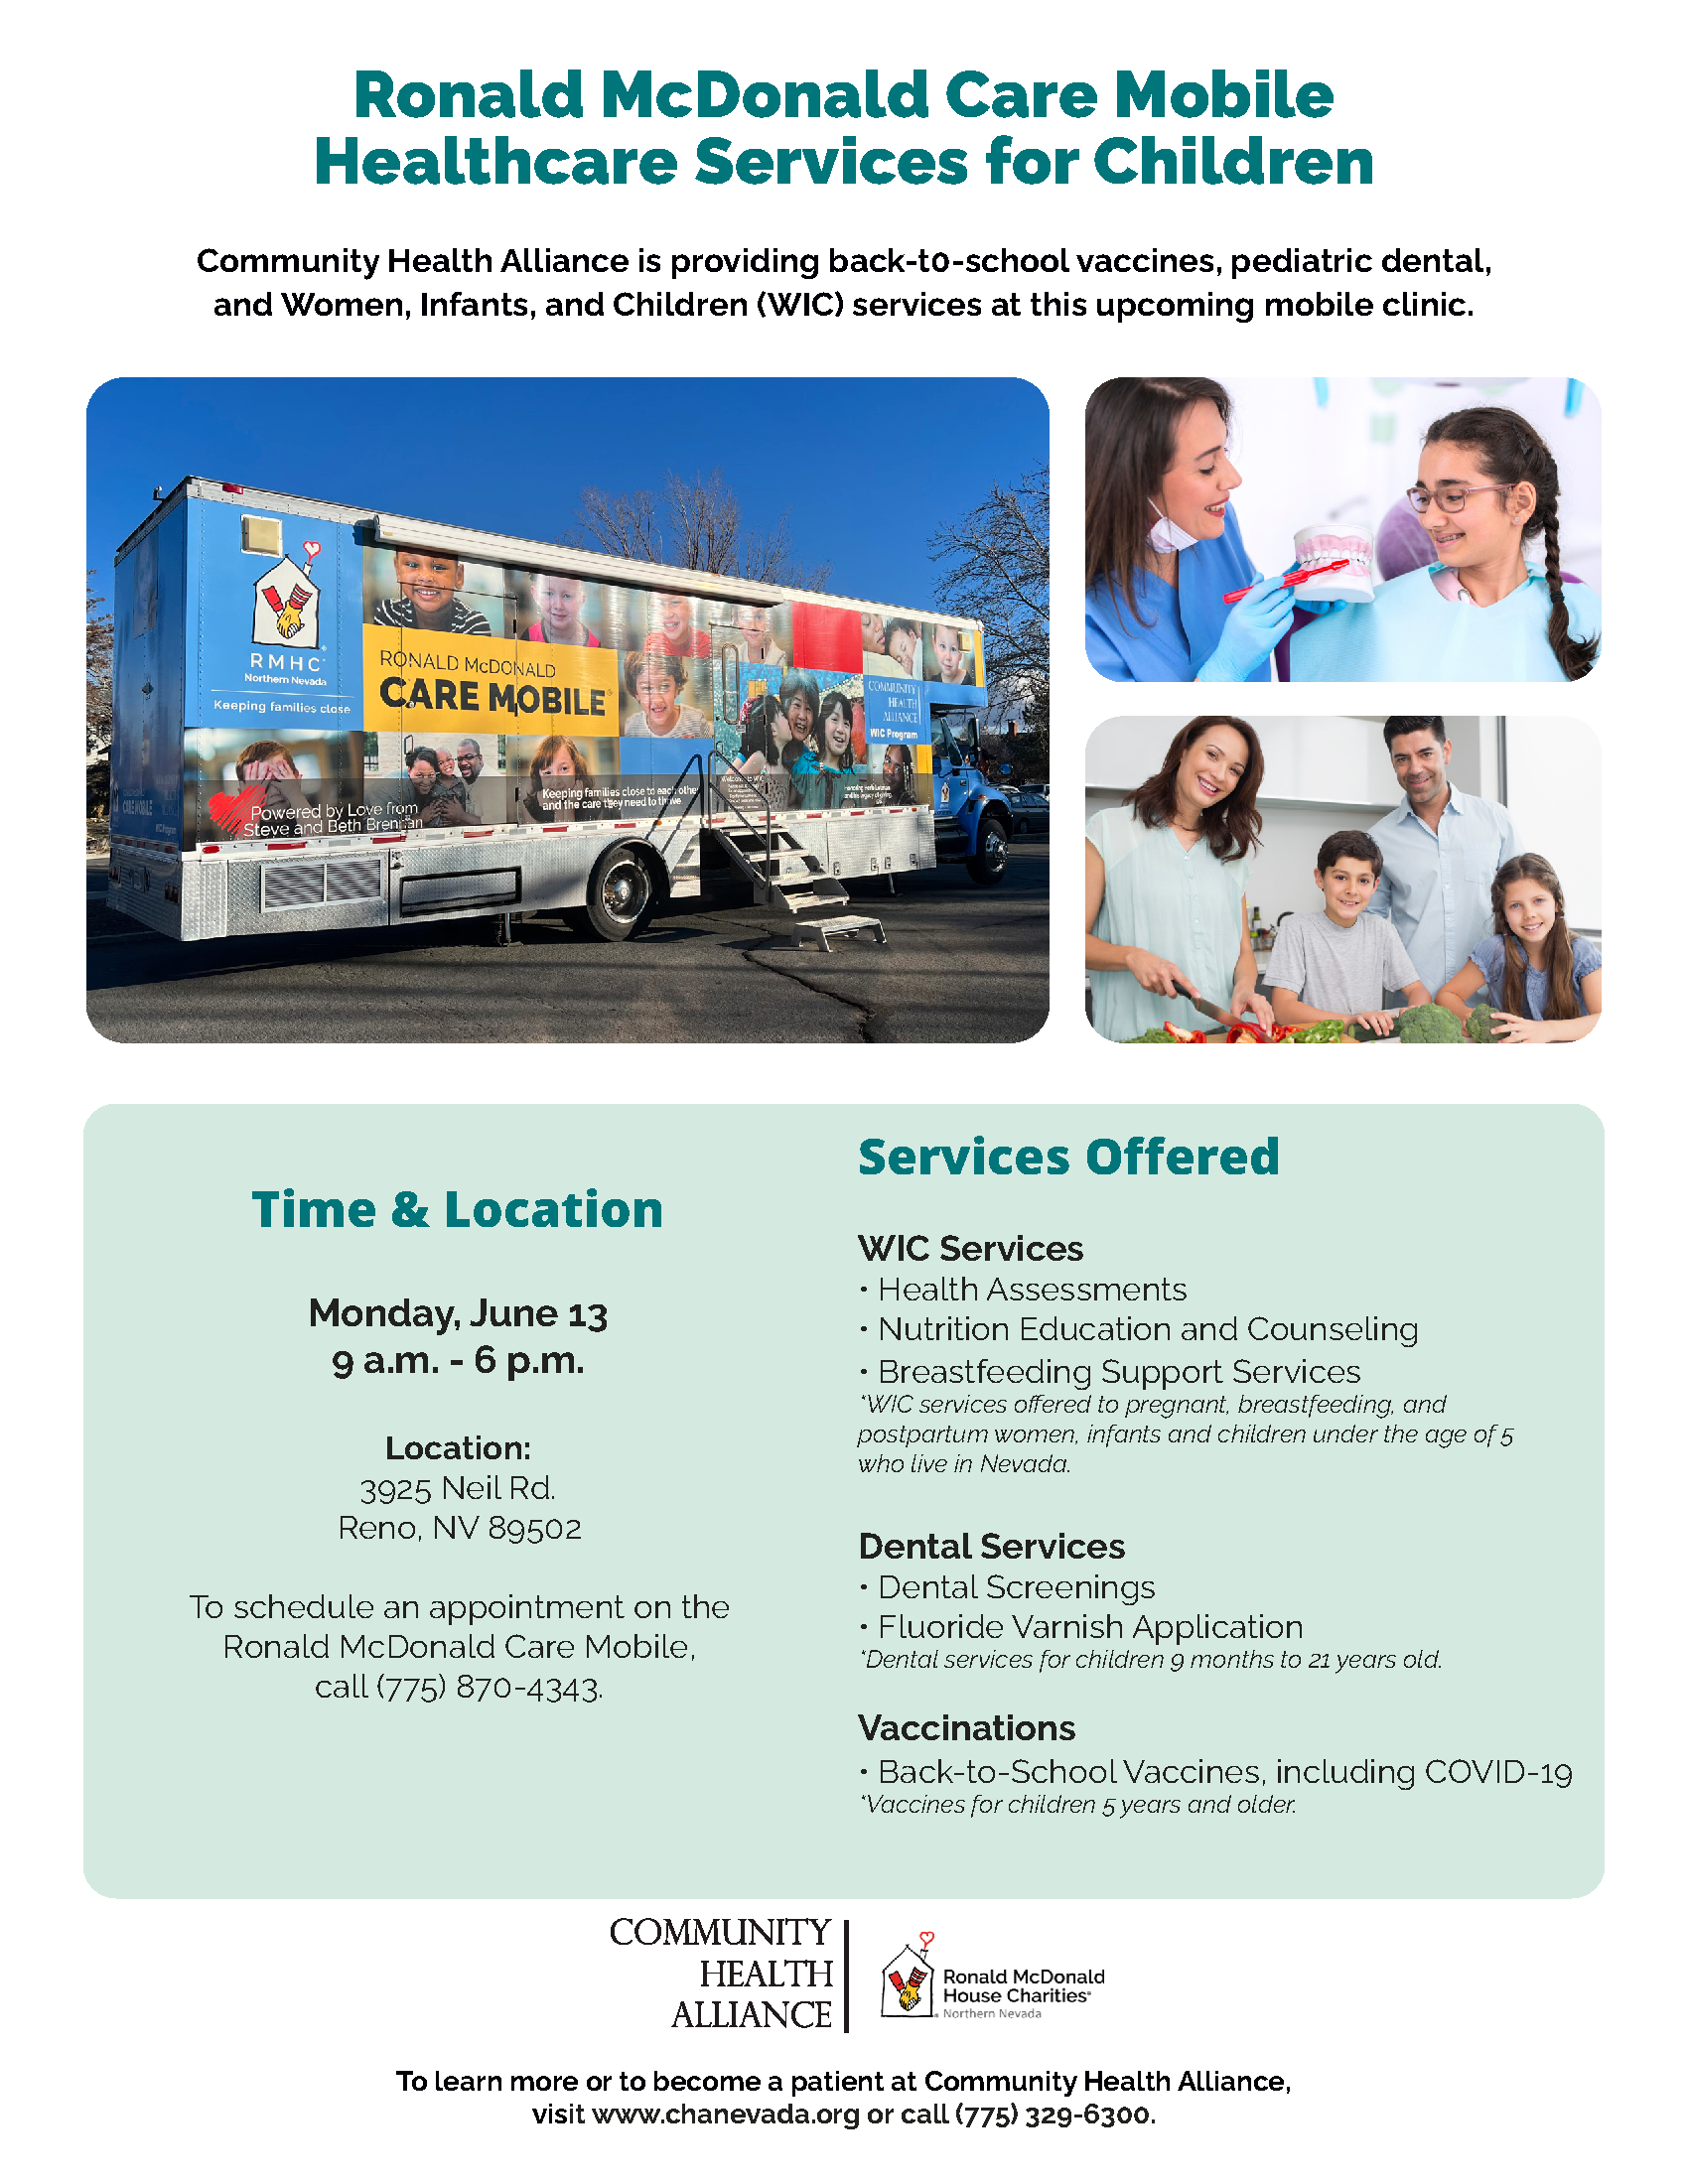 Ronald McDonald Care Mobile Healthcare Services for Children- Community Health Alliance